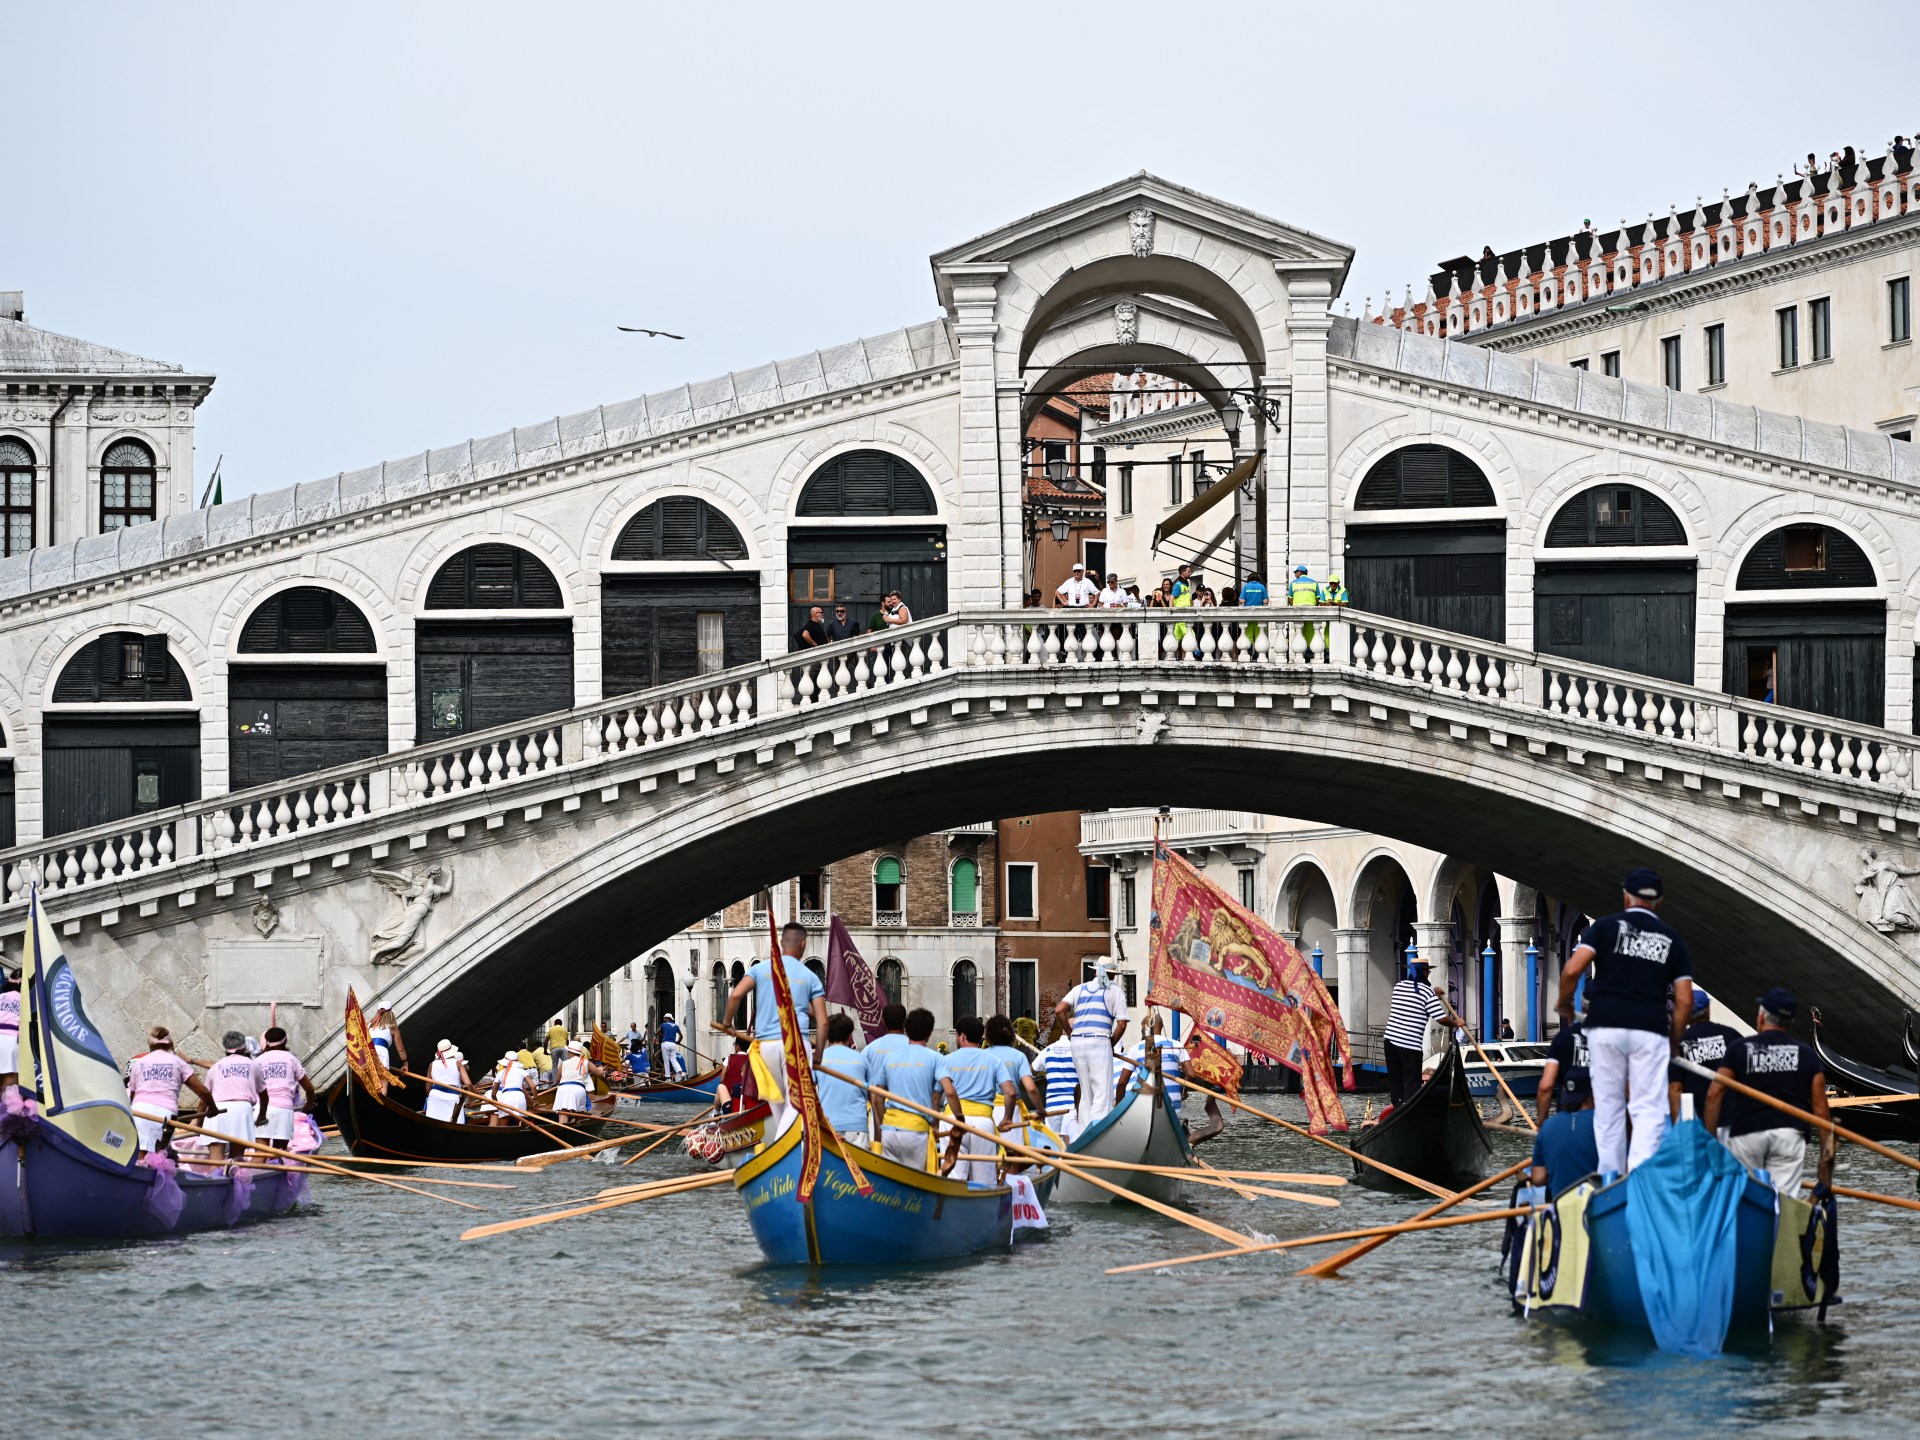 Venice entry tax failed to deter tourists, critics say | Tourism News